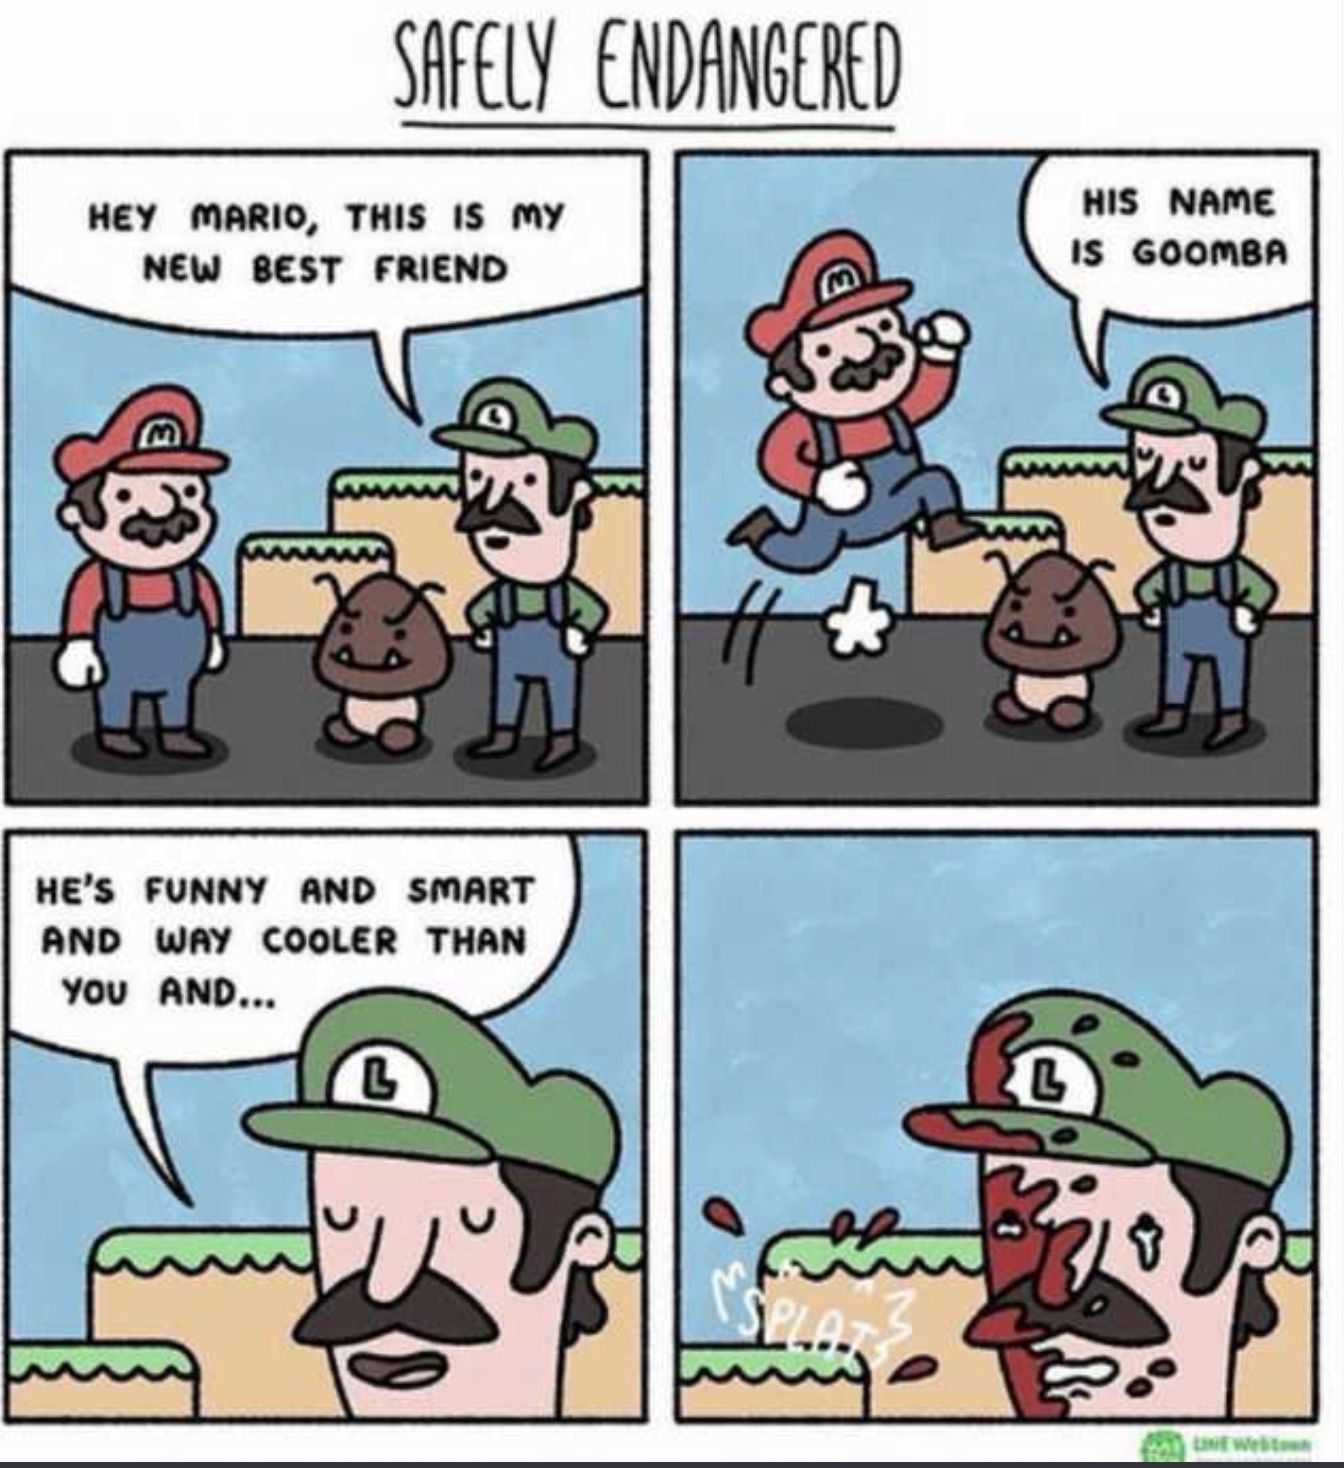 Luigi finally made a friend